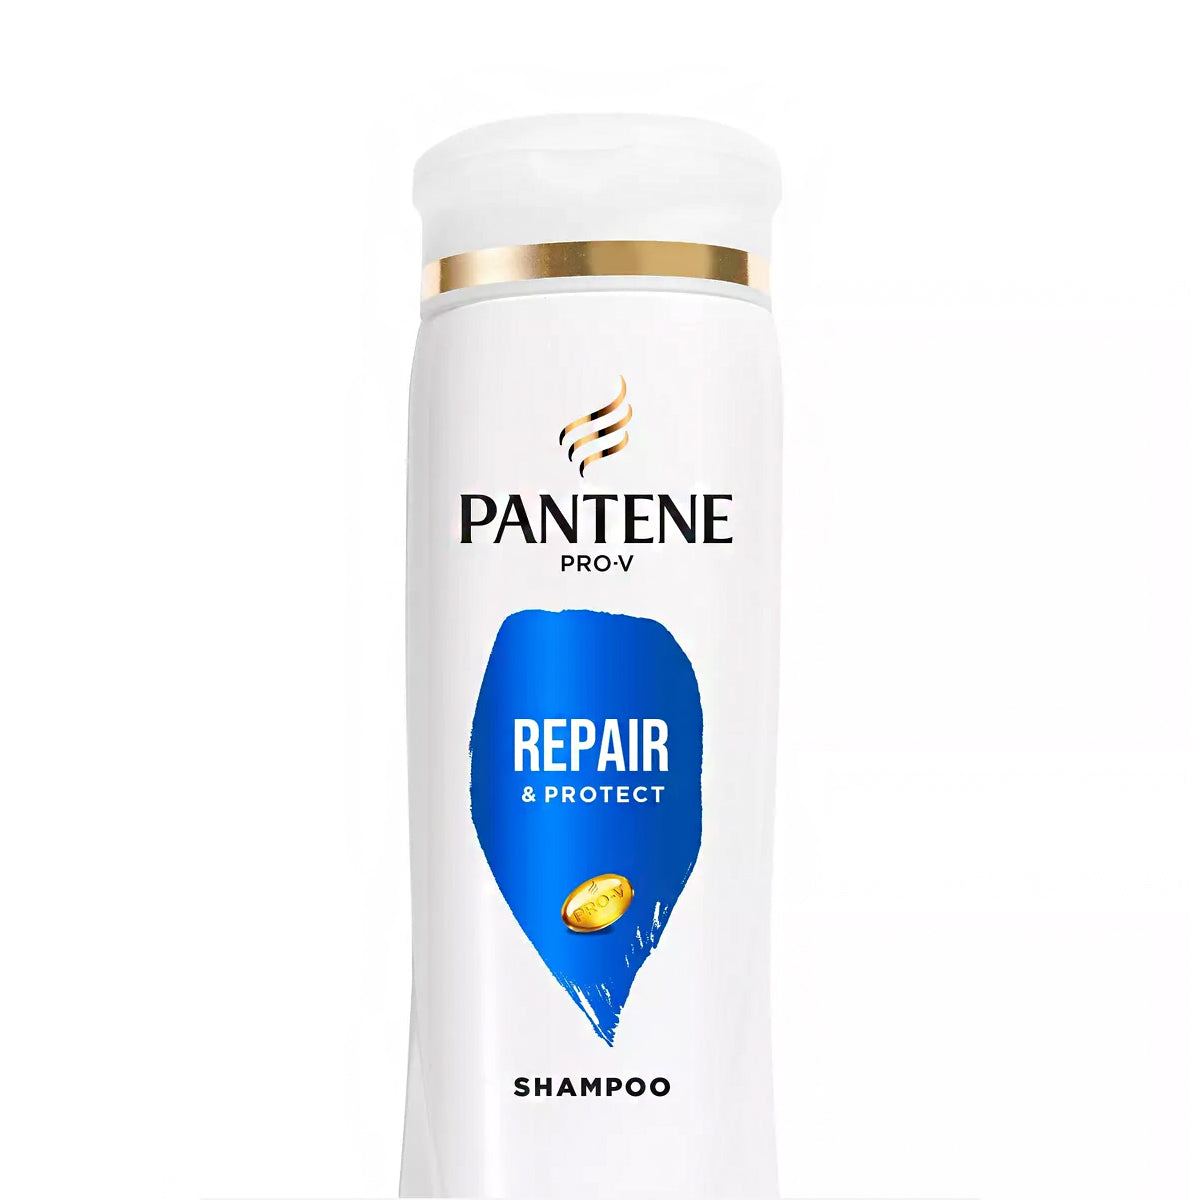 Pantene Pro-V Repair & Protect Shampoo 12oz